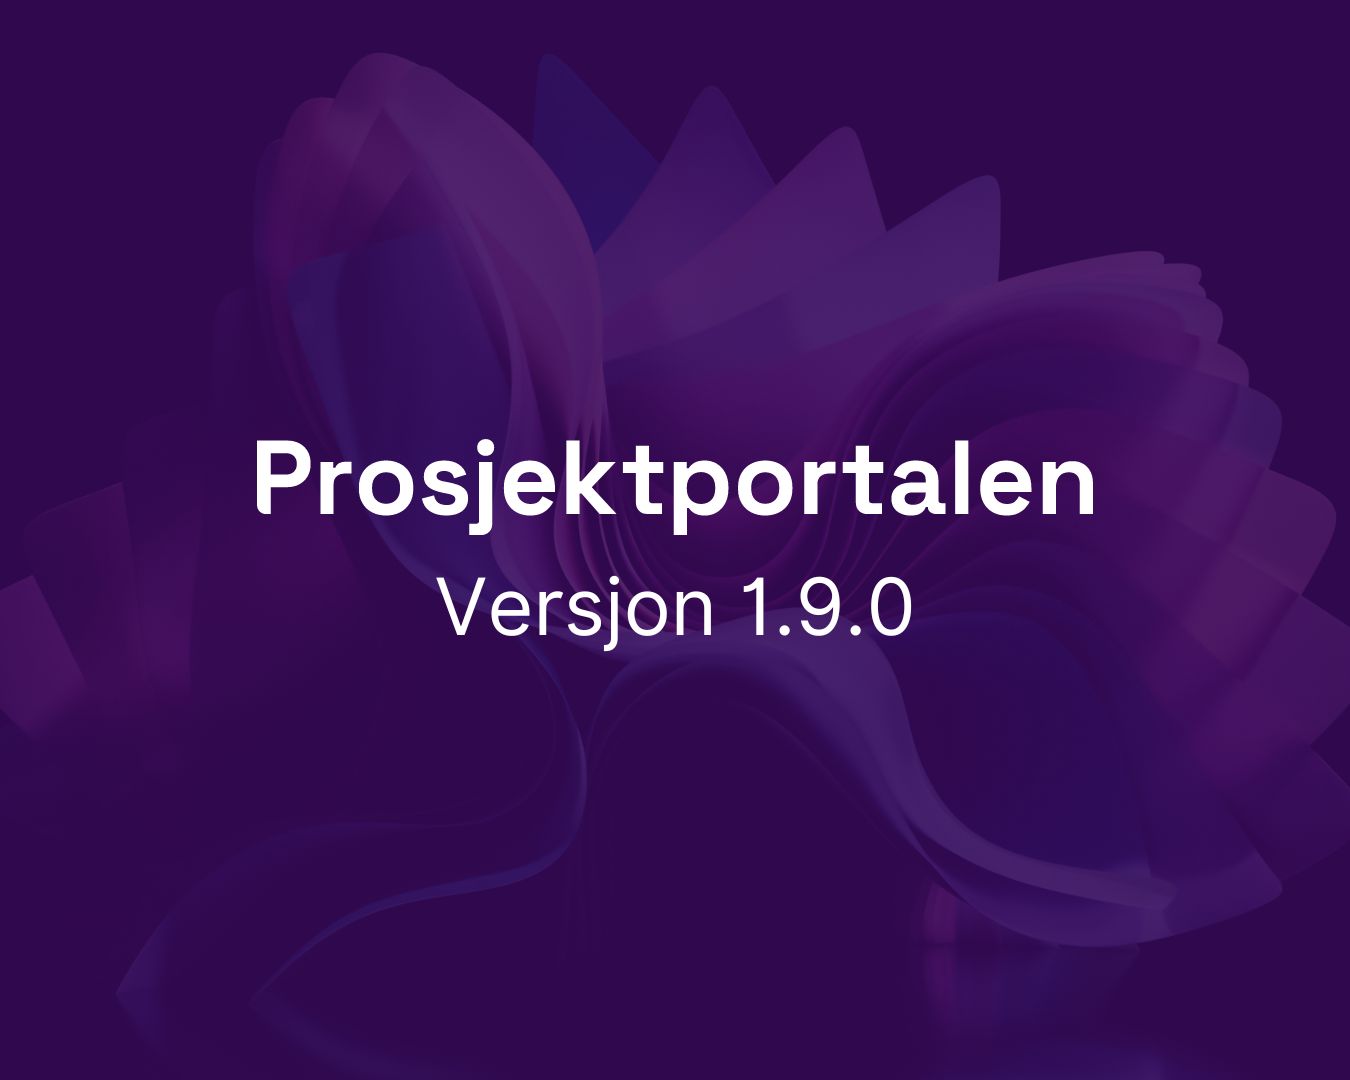 Prosjektportalen versjon 1.9.0